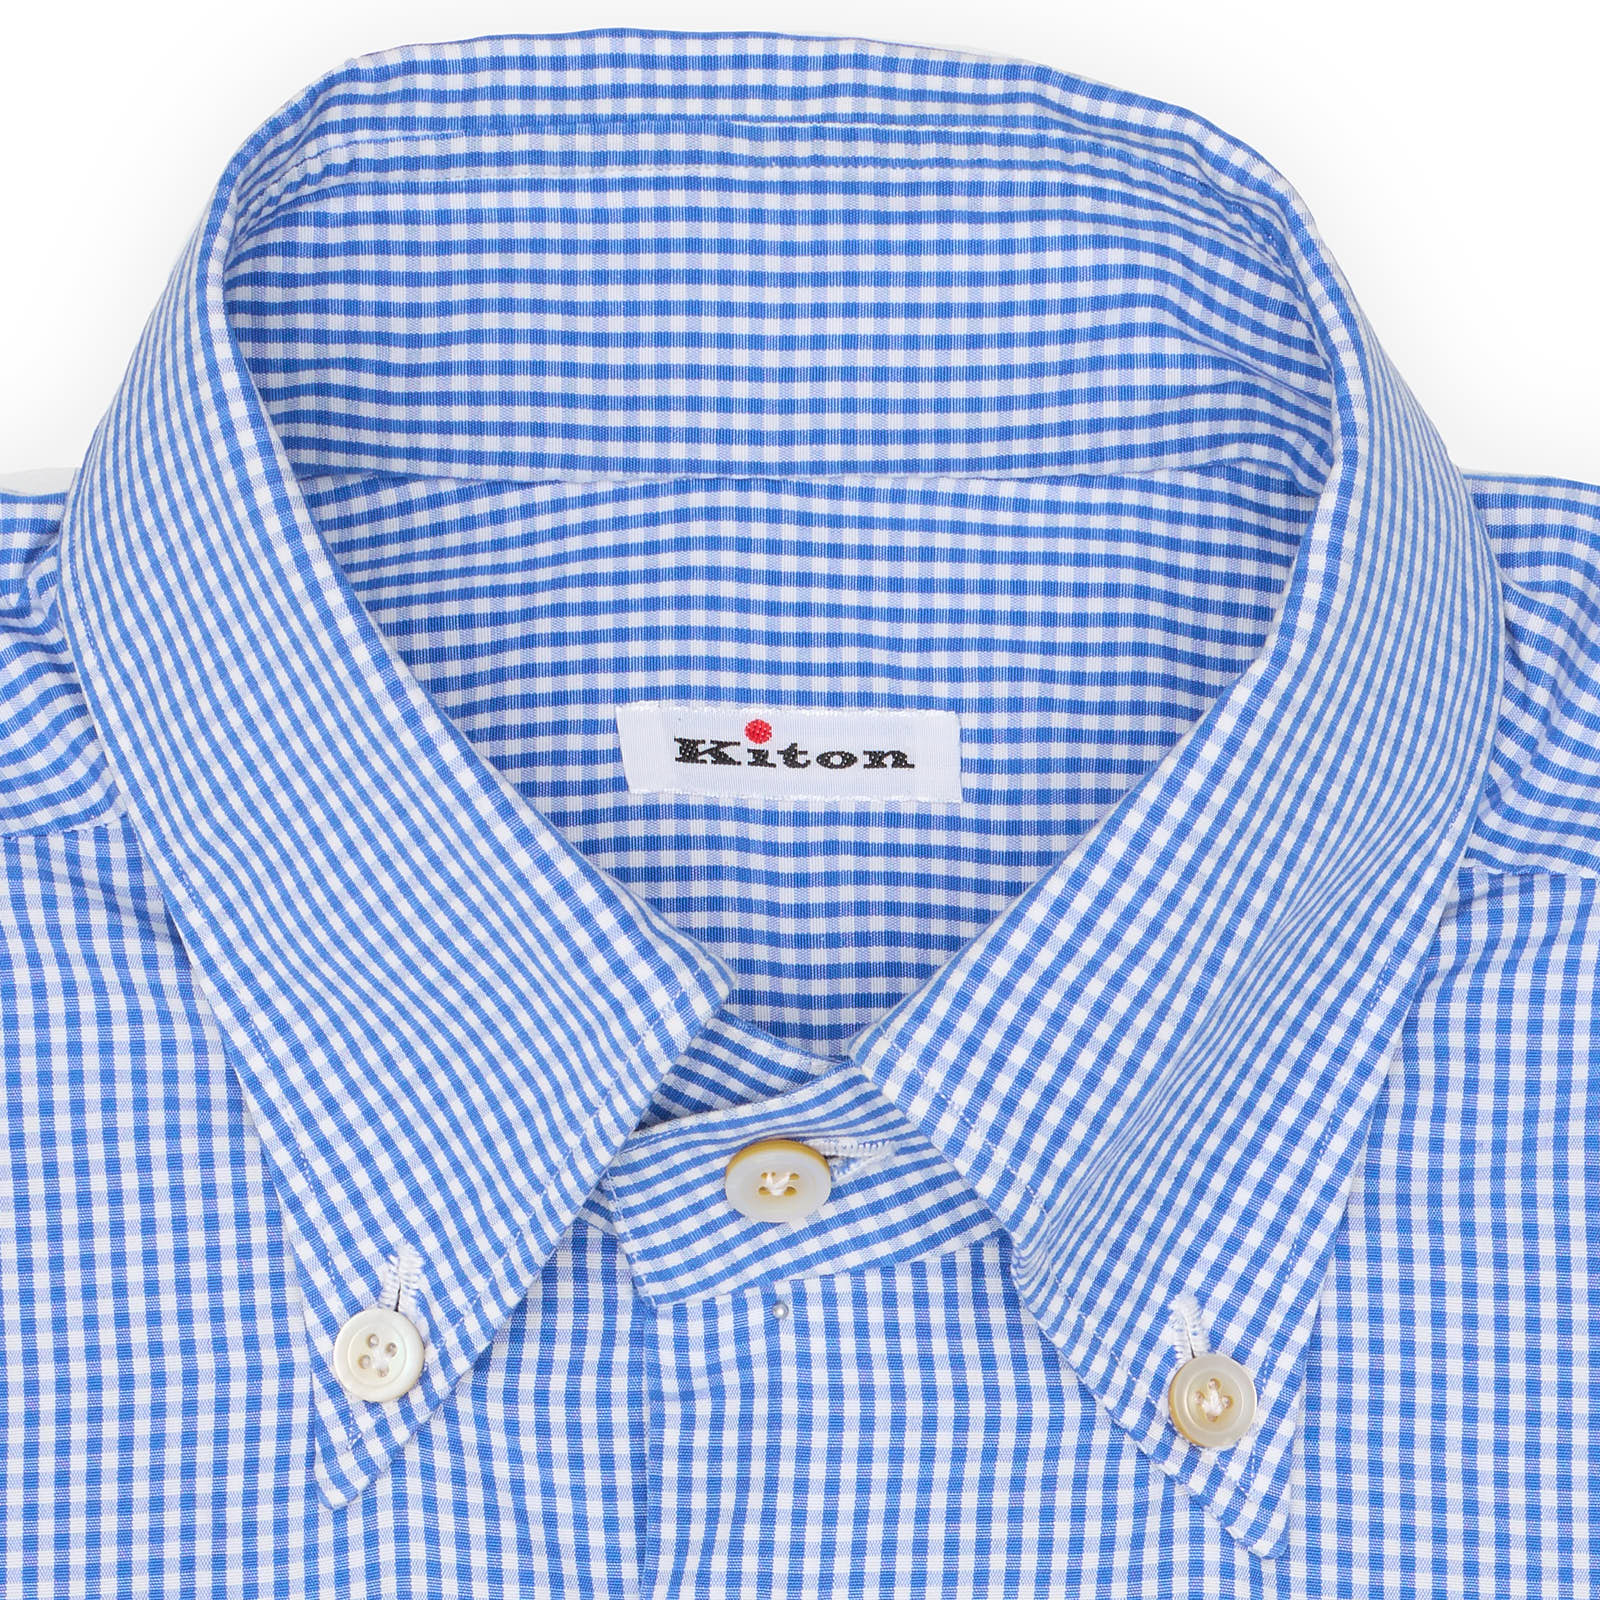 KITON Napoli Handmade Blue Plaid Cotton Button-Down Dress Shirt EU 38 NEW US 15